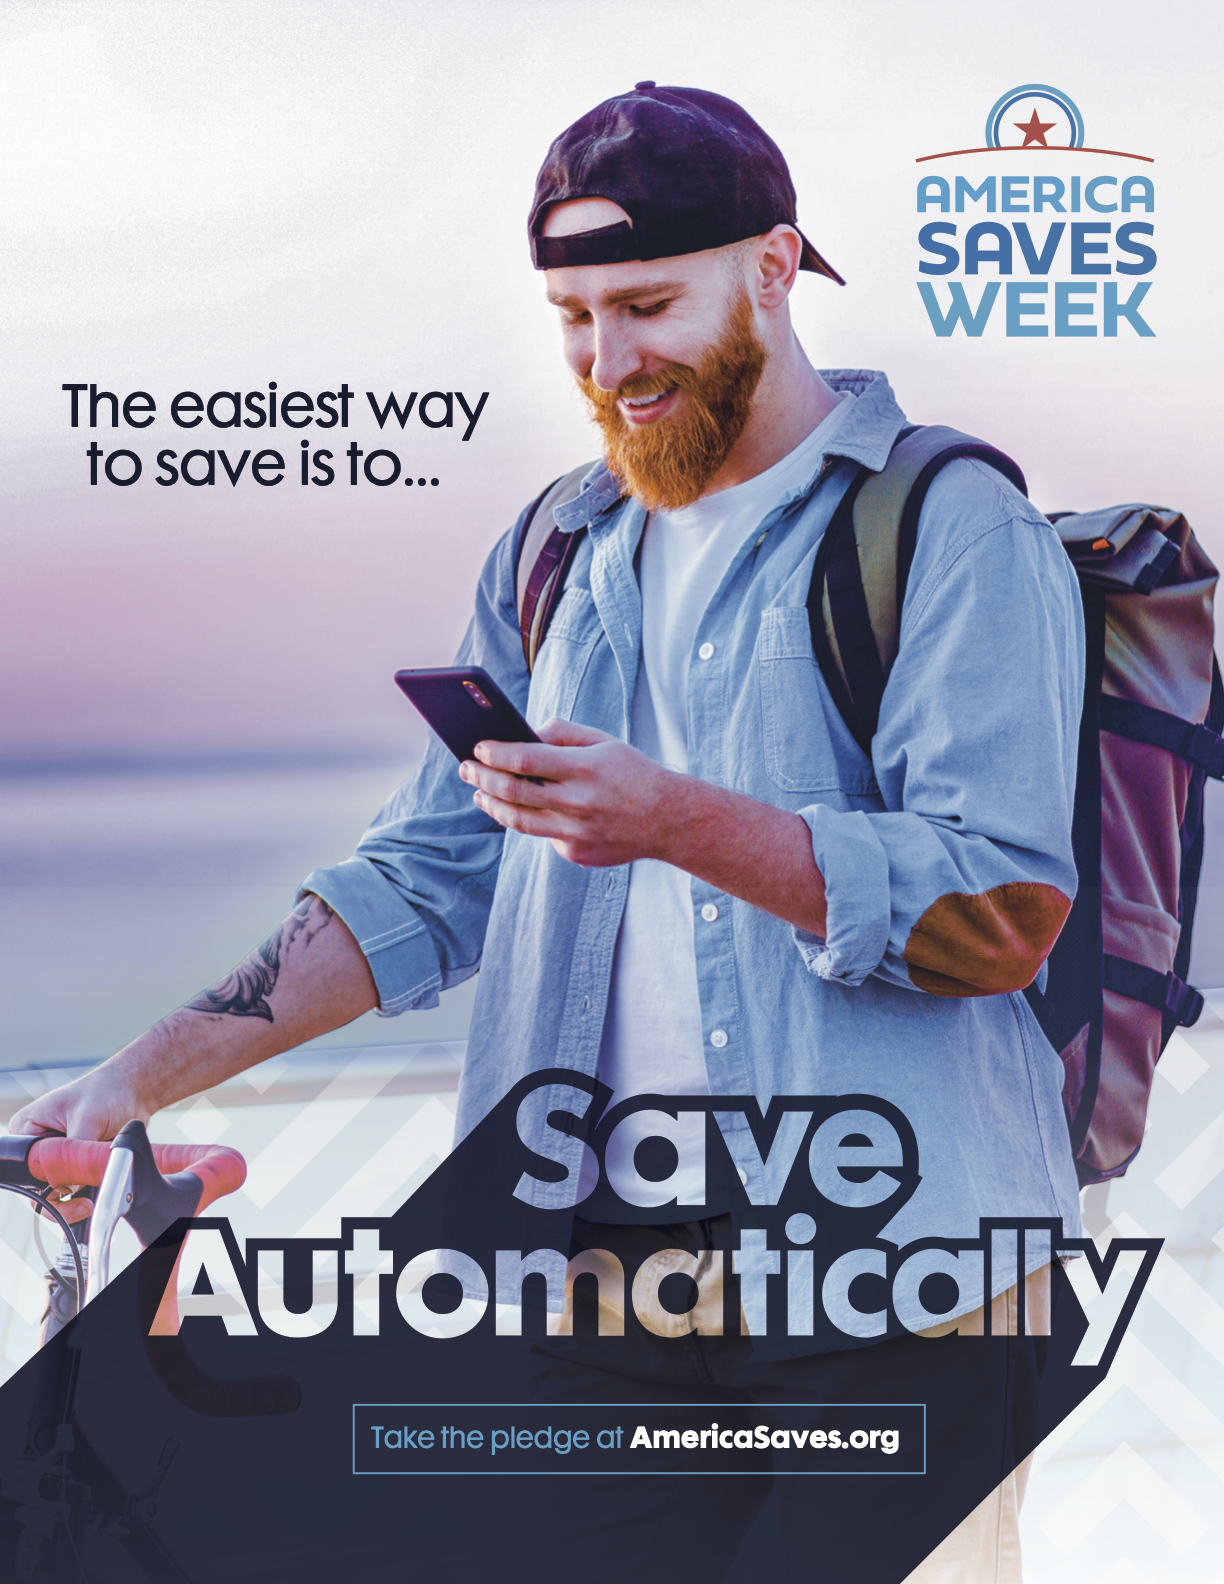 Save Automatically